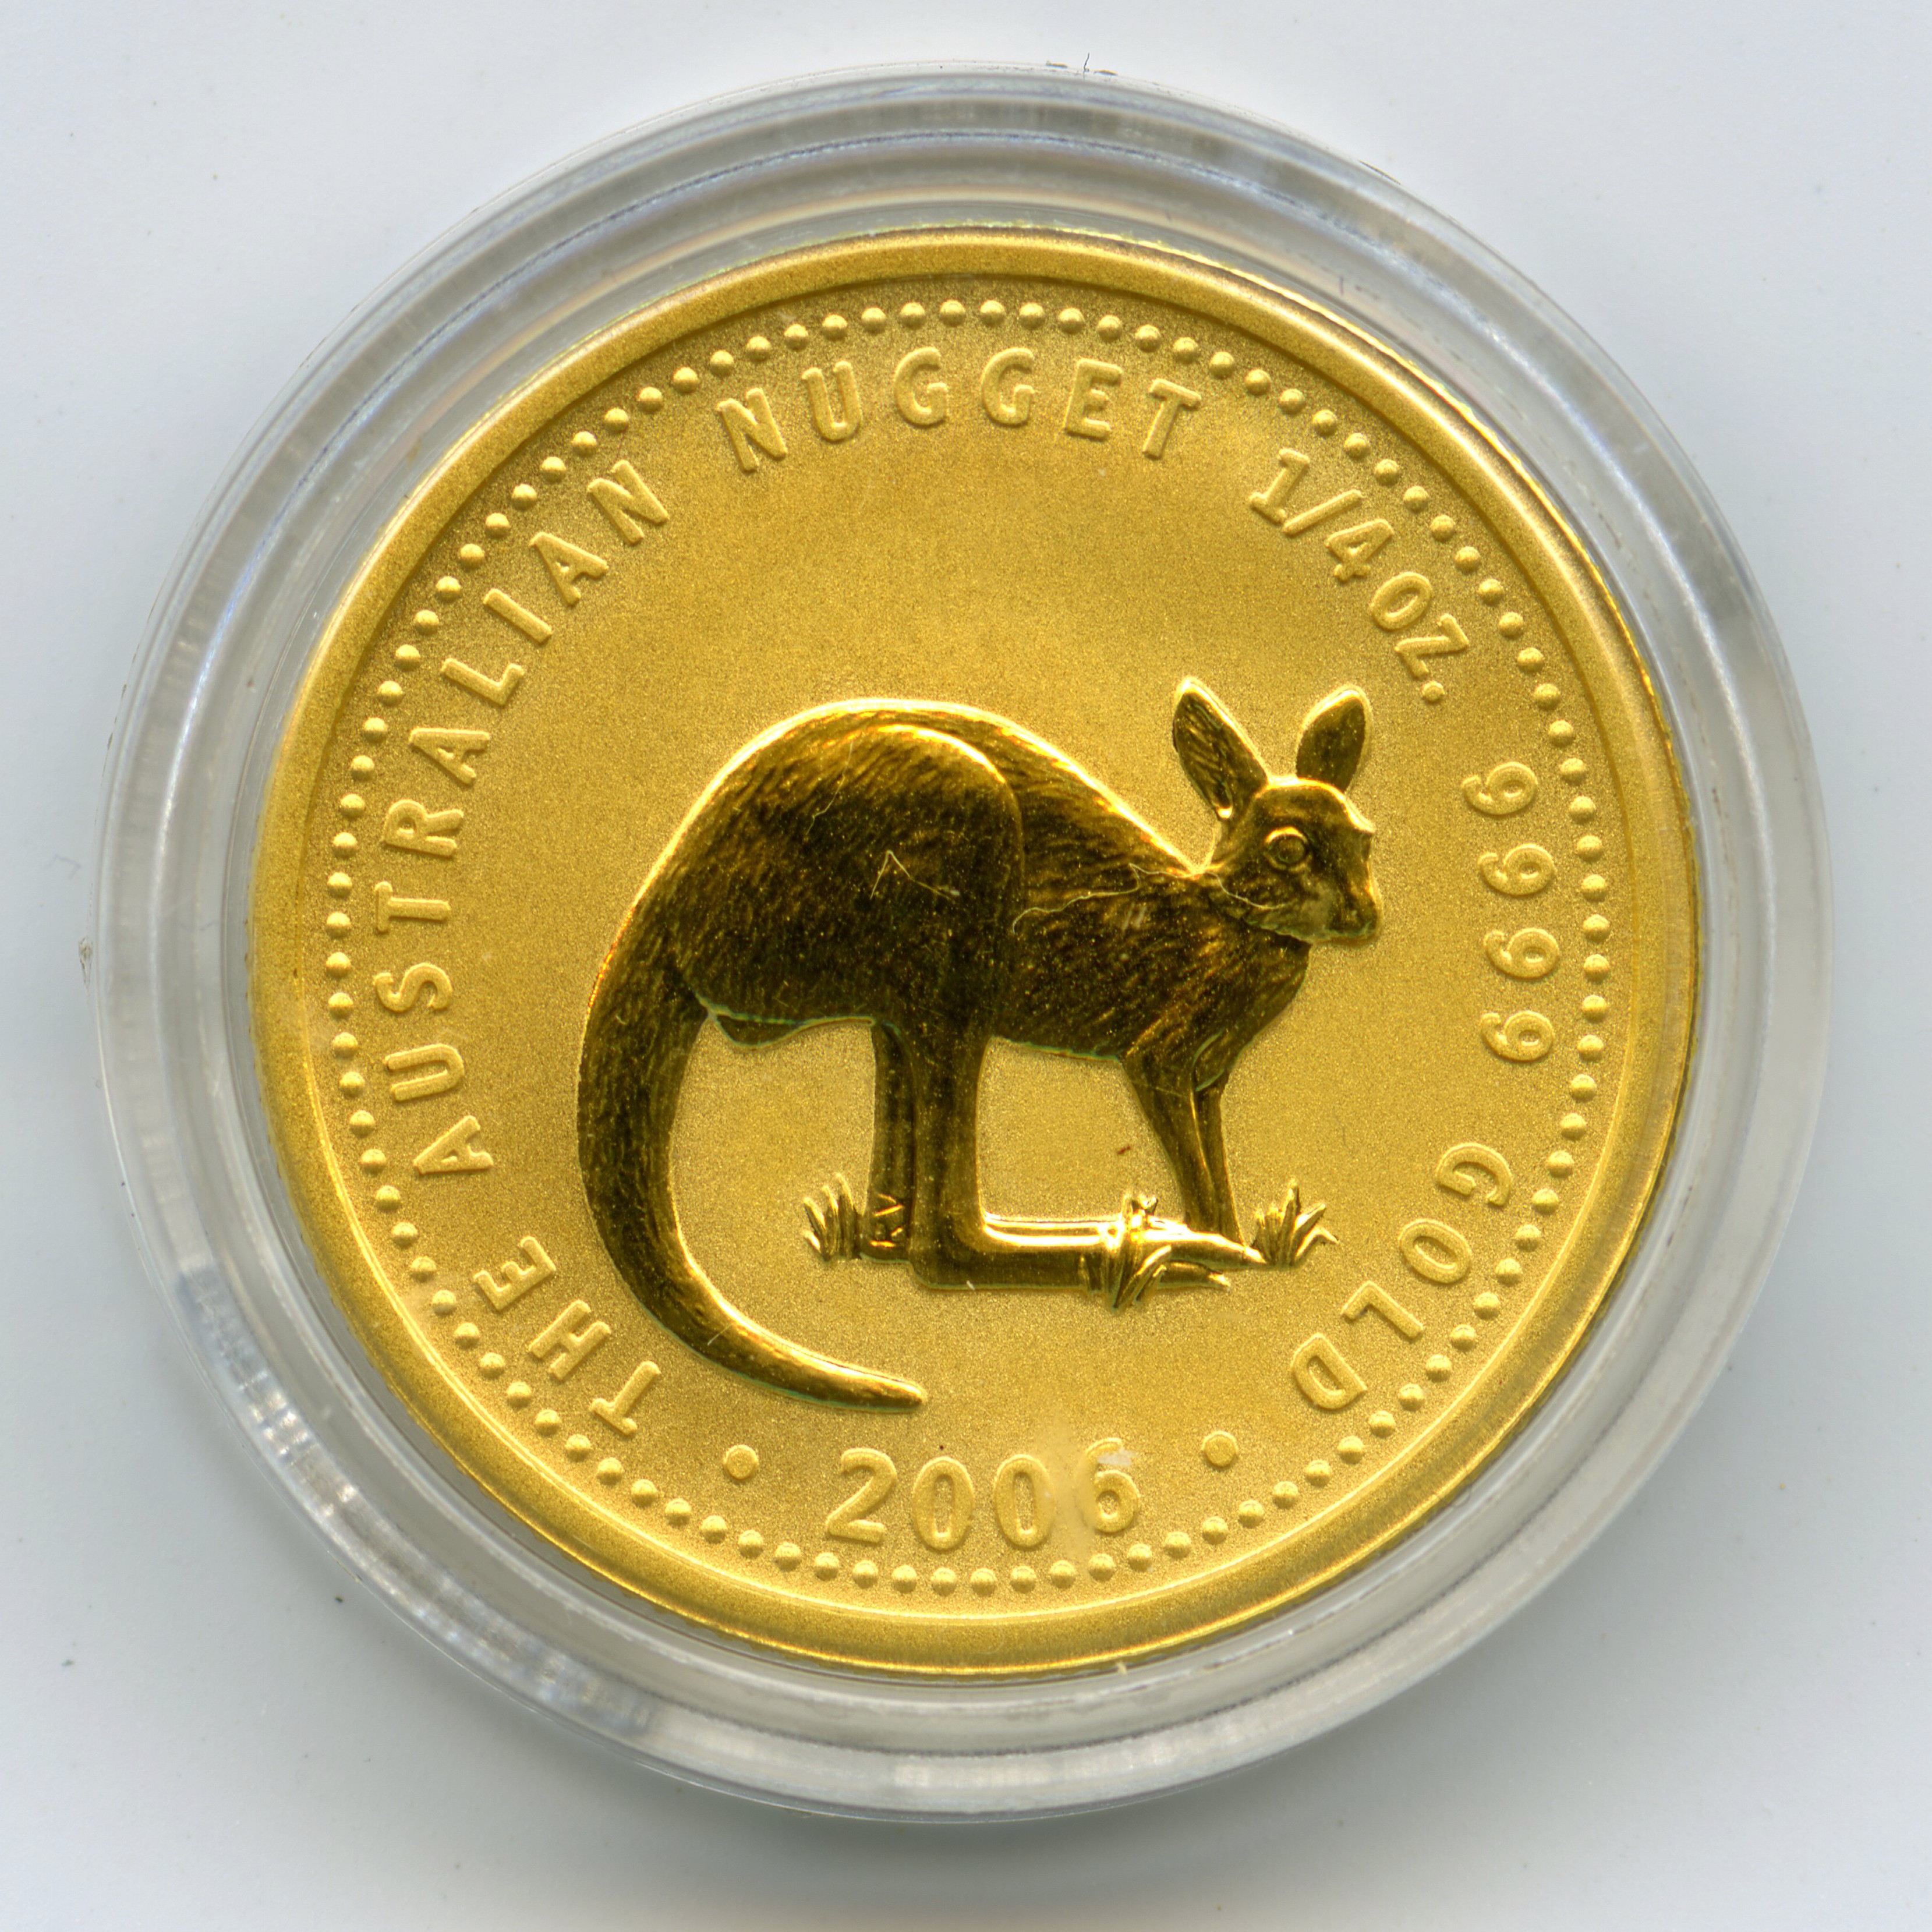 Australie - 25$ Kangourou - 2006 avers